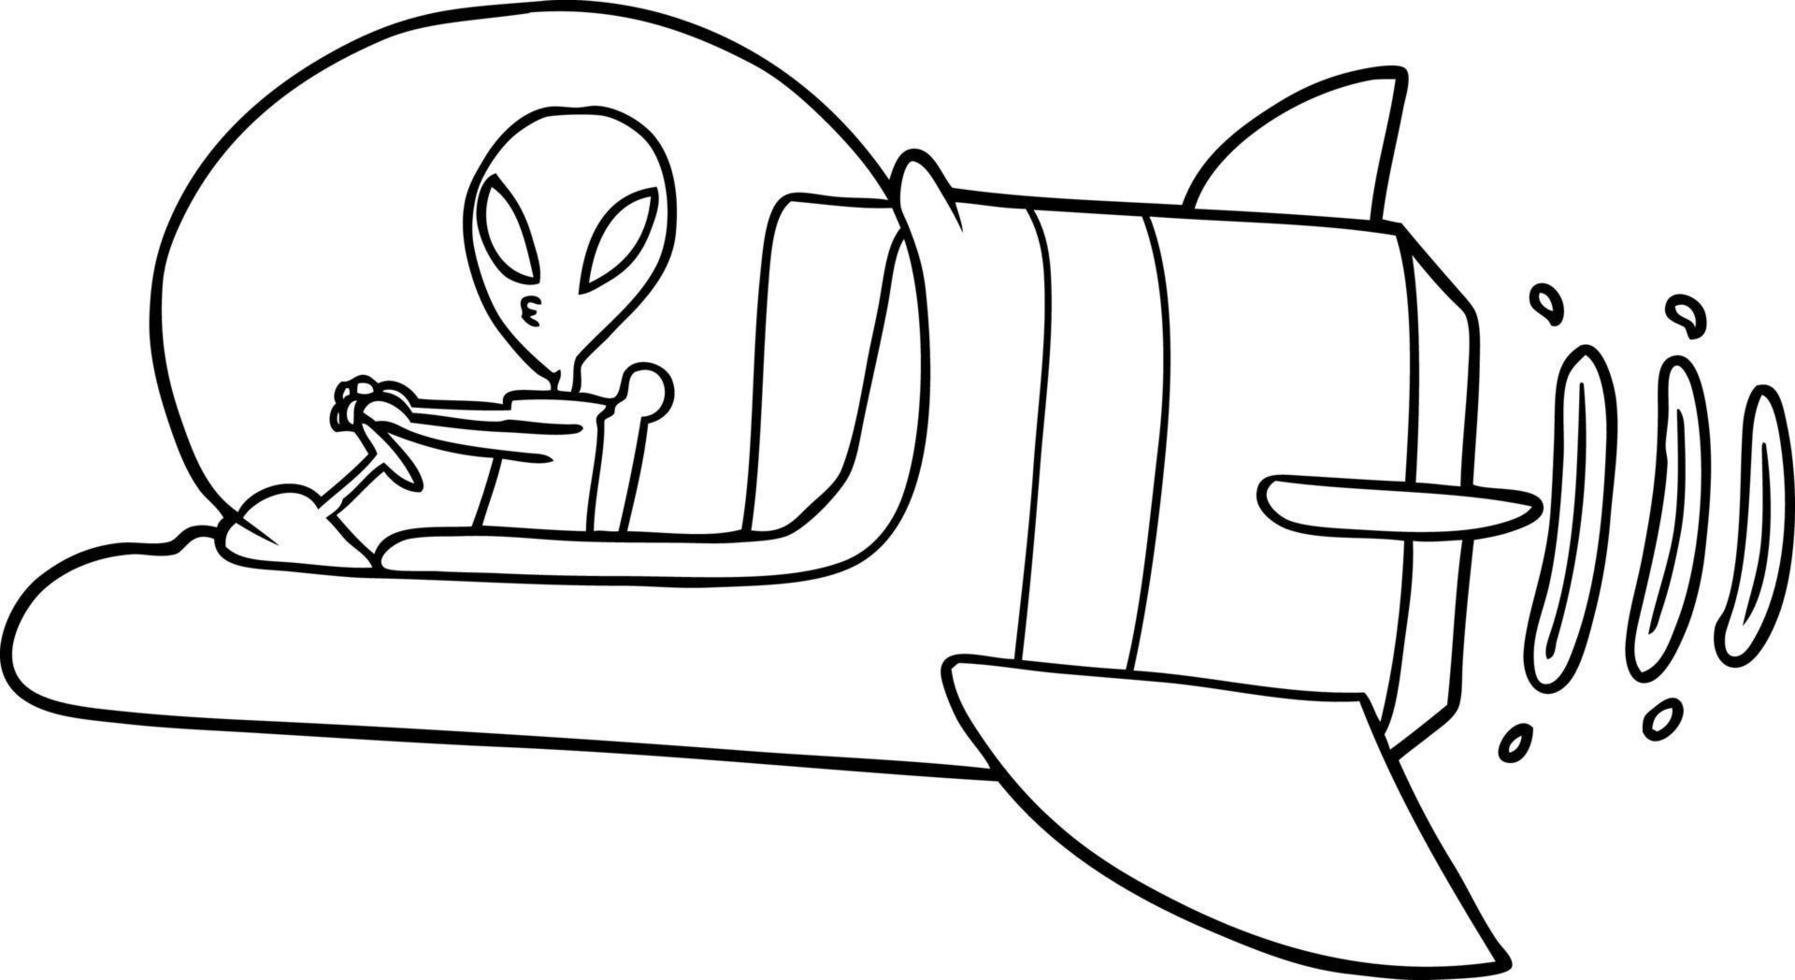 nave alienígena de desenho animado vetor